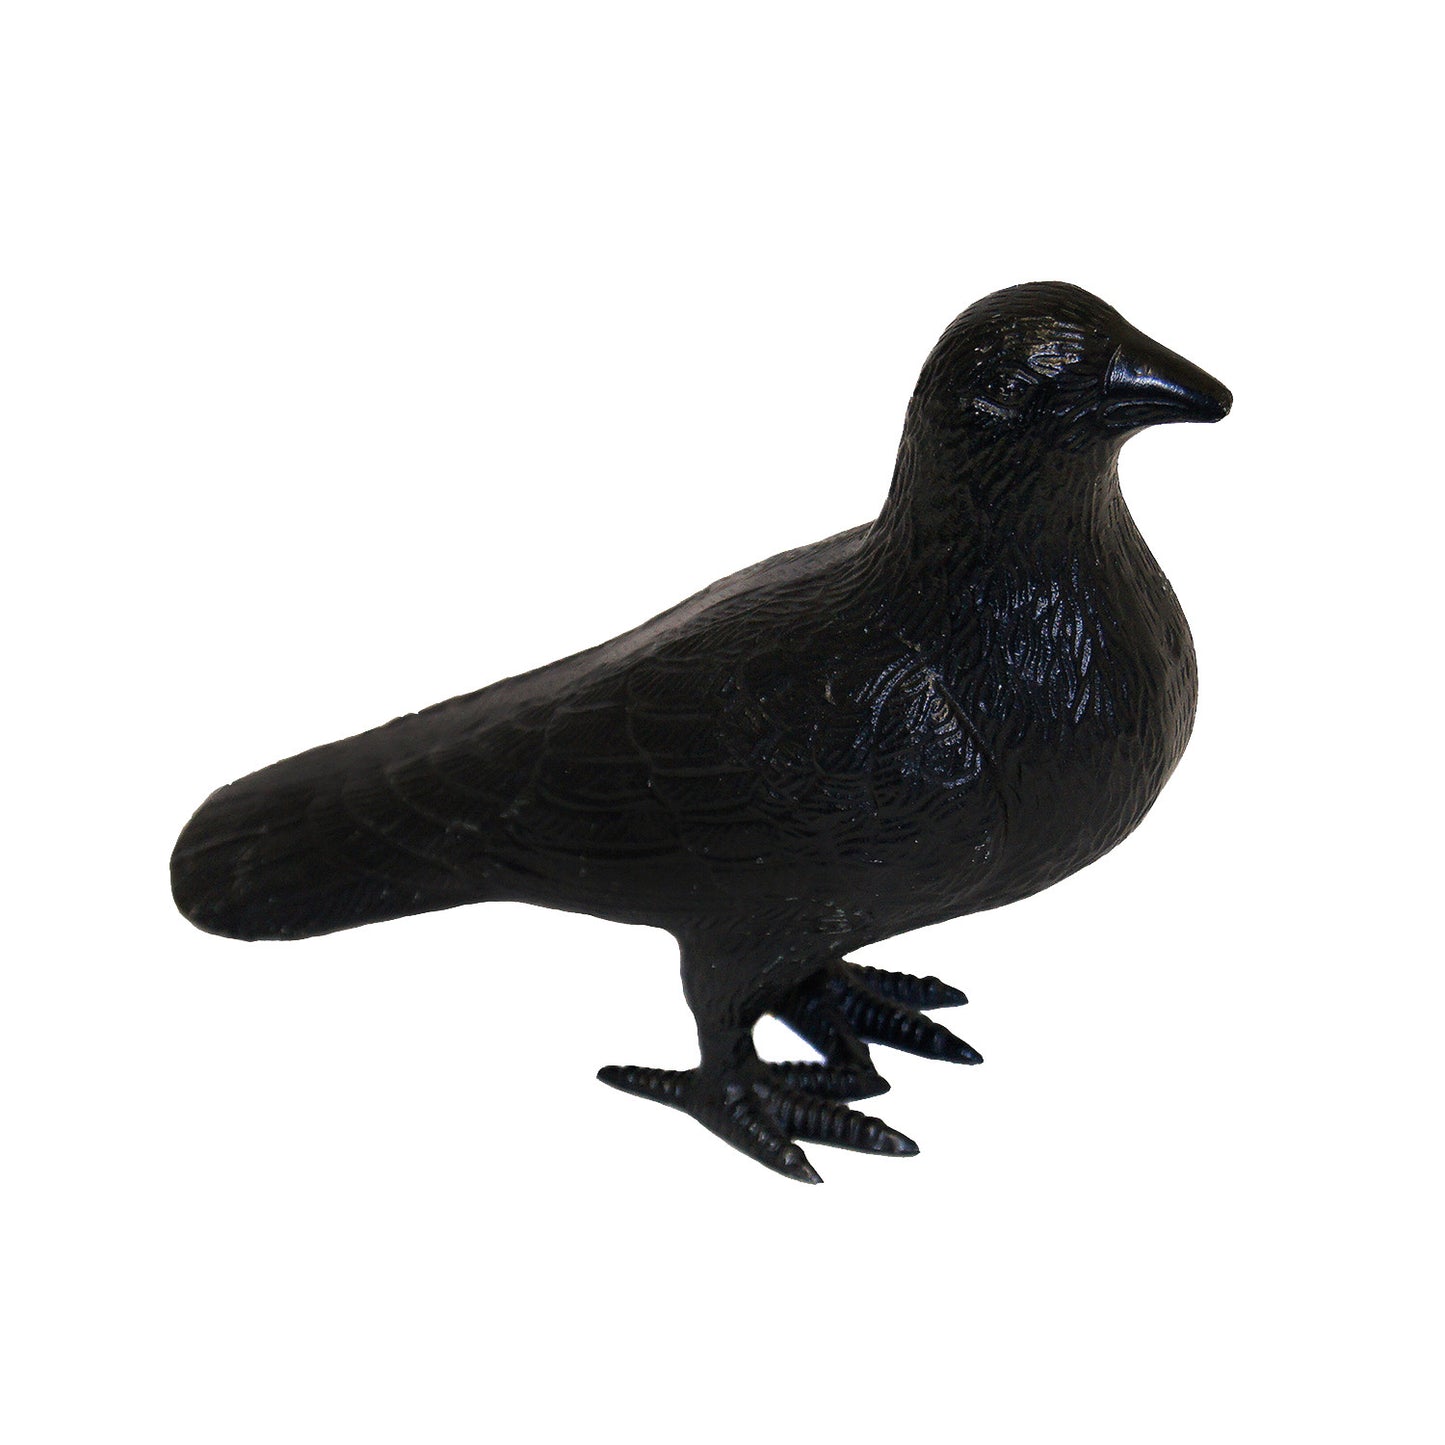 GiftBay GS-1269(S/2) Garden Pigeon Statue Pair, Solid Cast Aluminum Metal, Black Color Patina Finish